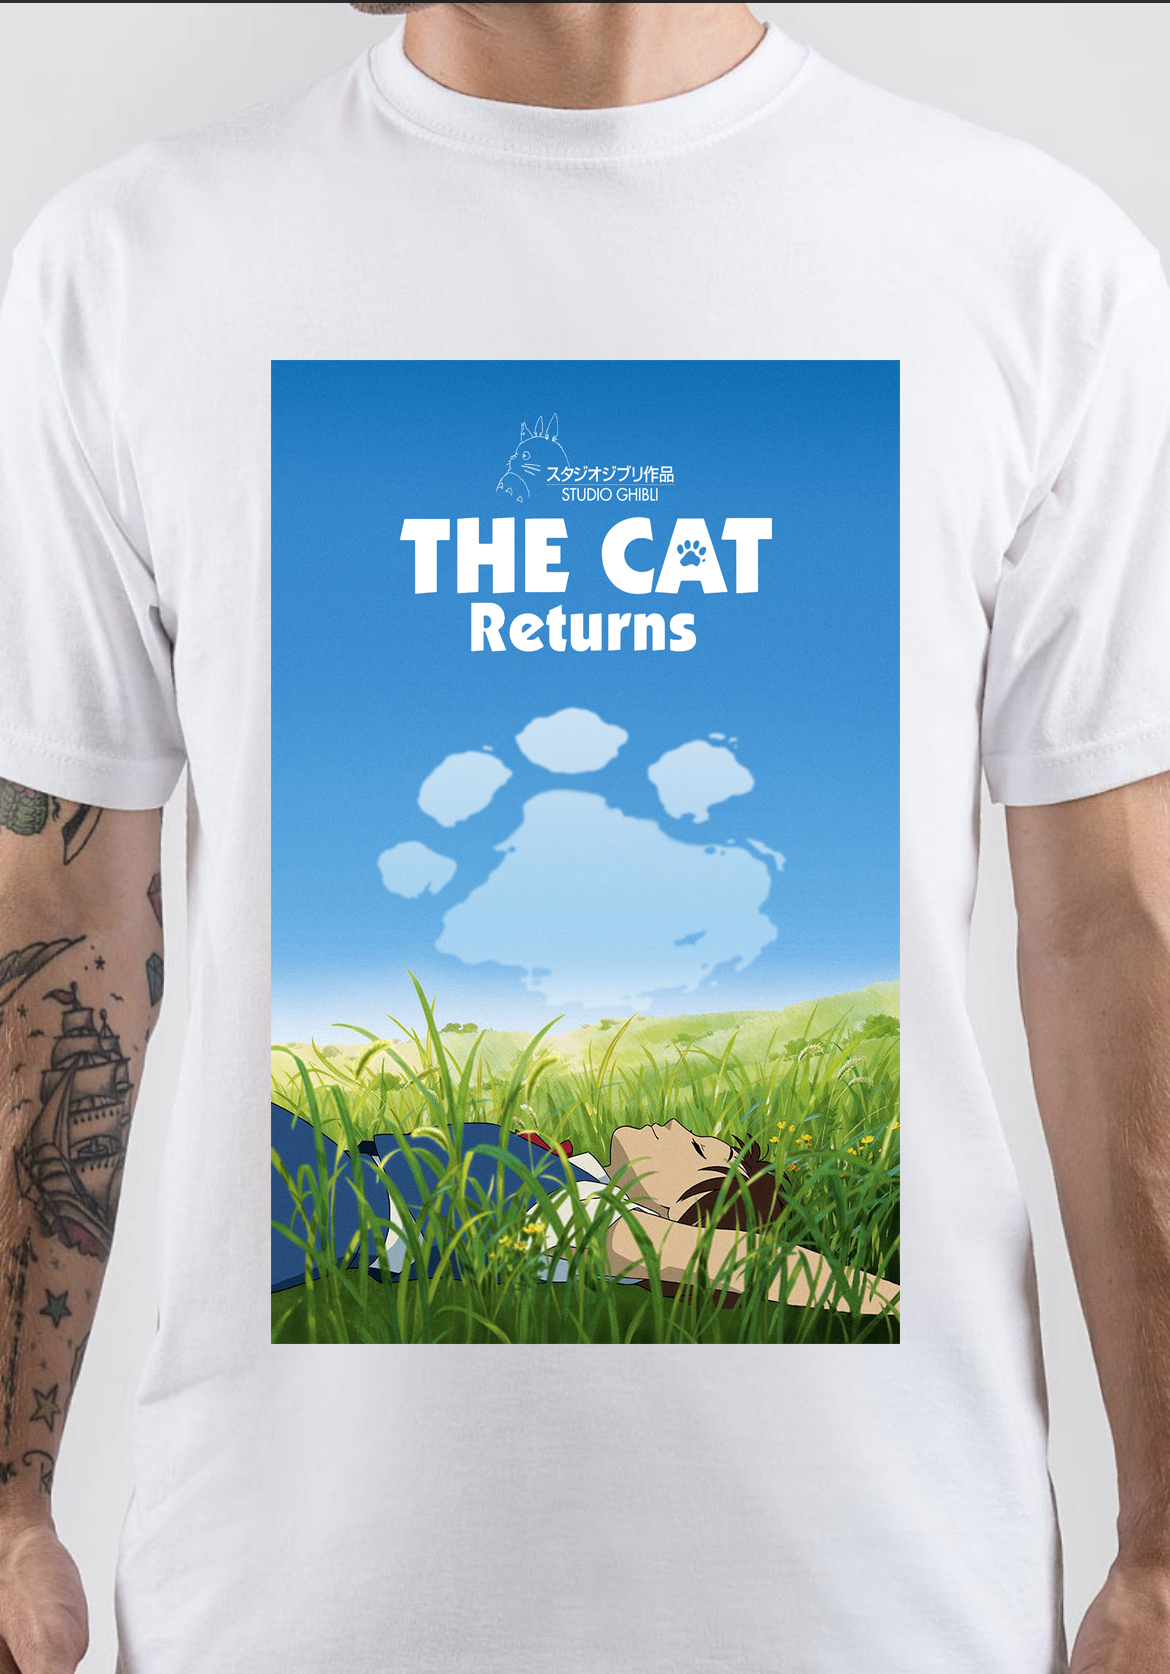 The Cat Returns T-Shirt And Merchandise